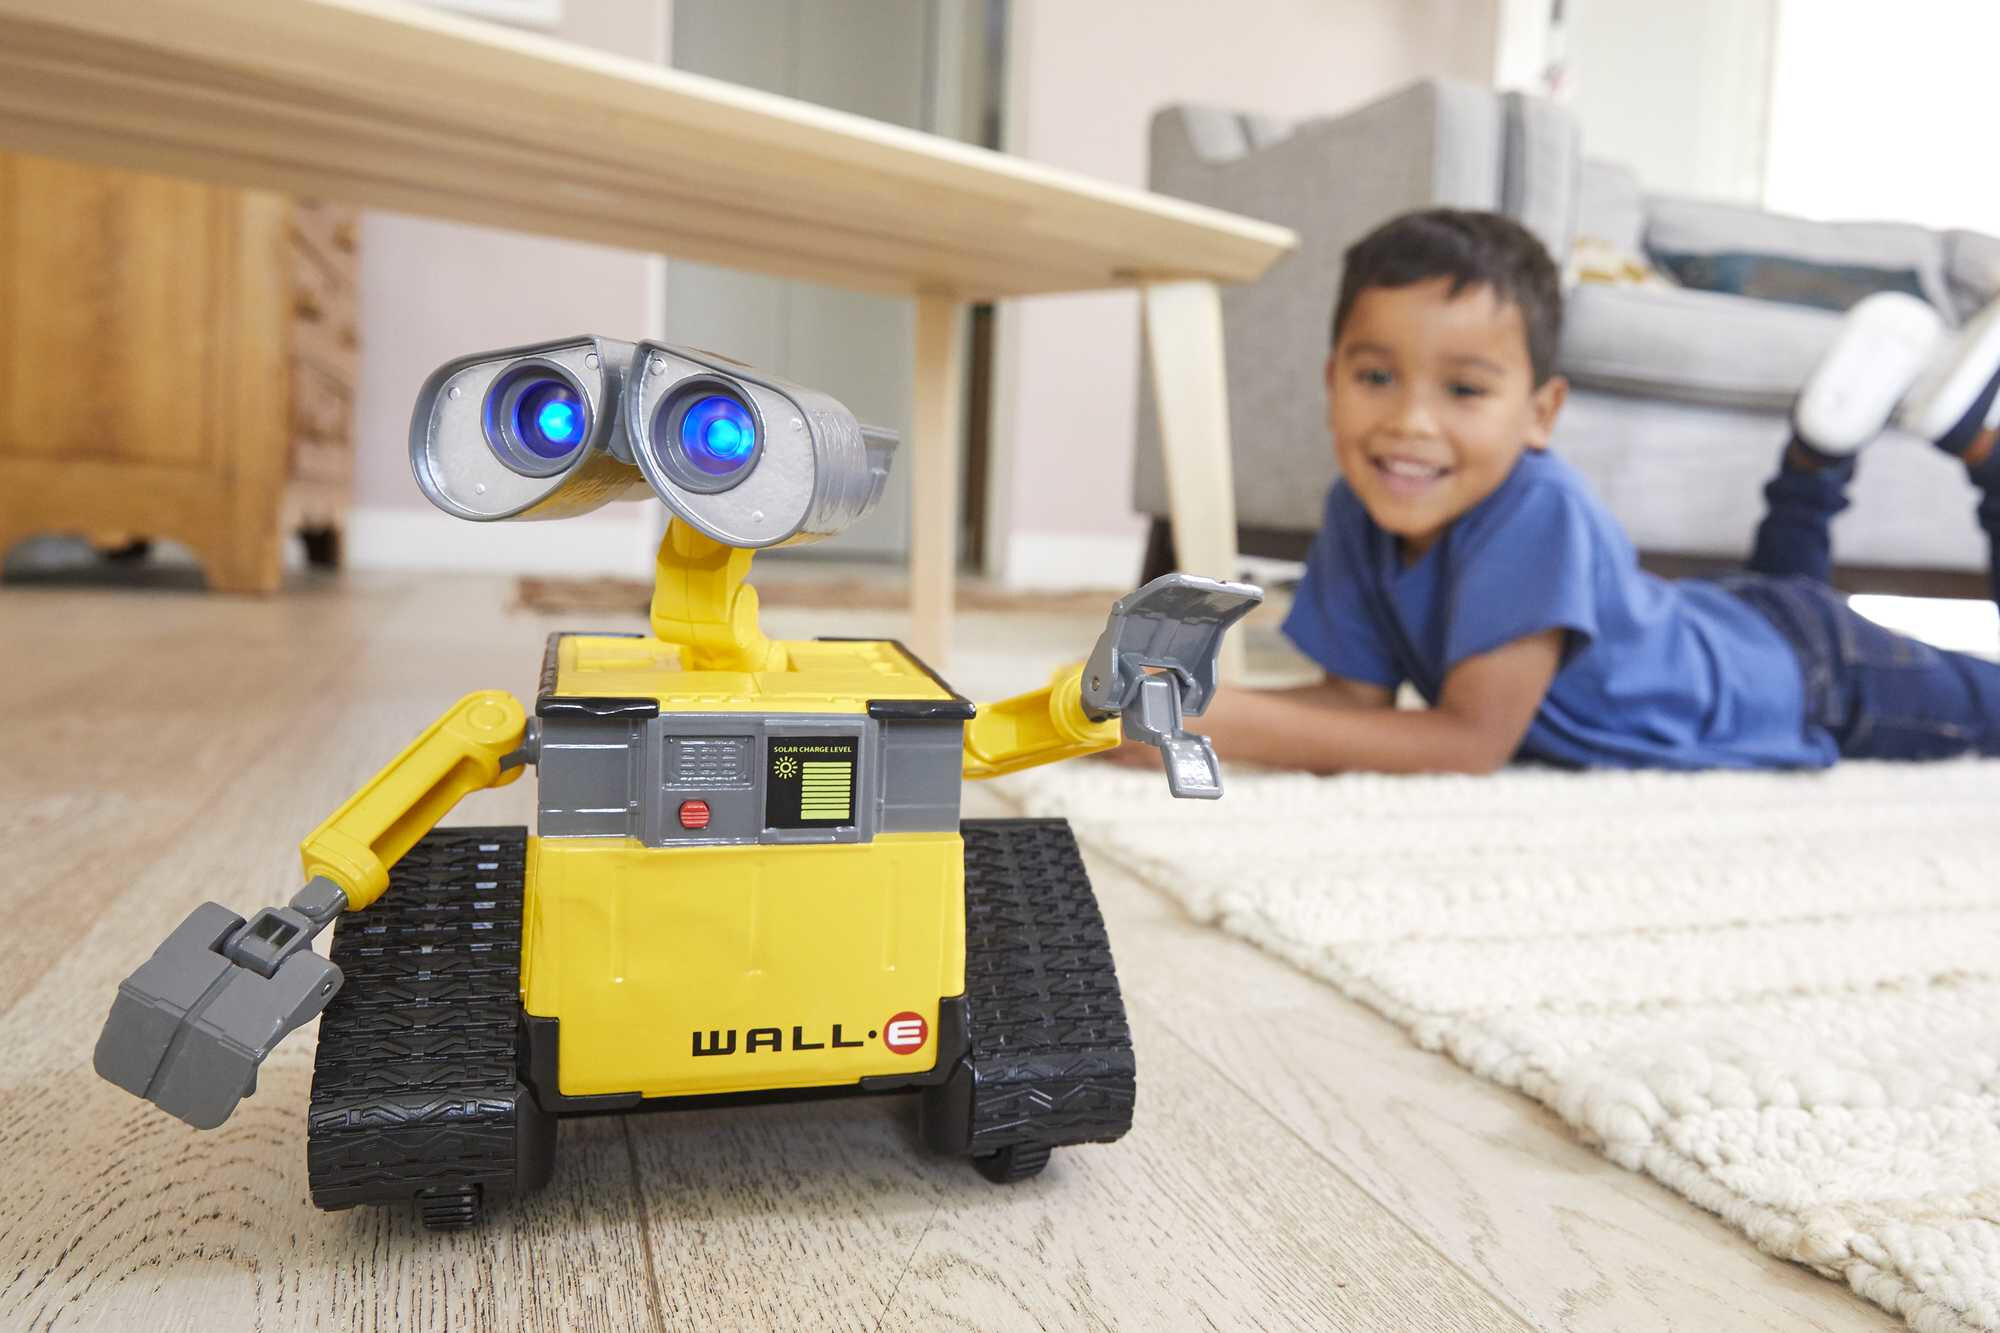 Disney and Pixar WALL-E Robot Toy, Remote Control Hello WALL-E Robot - image 3 of 7